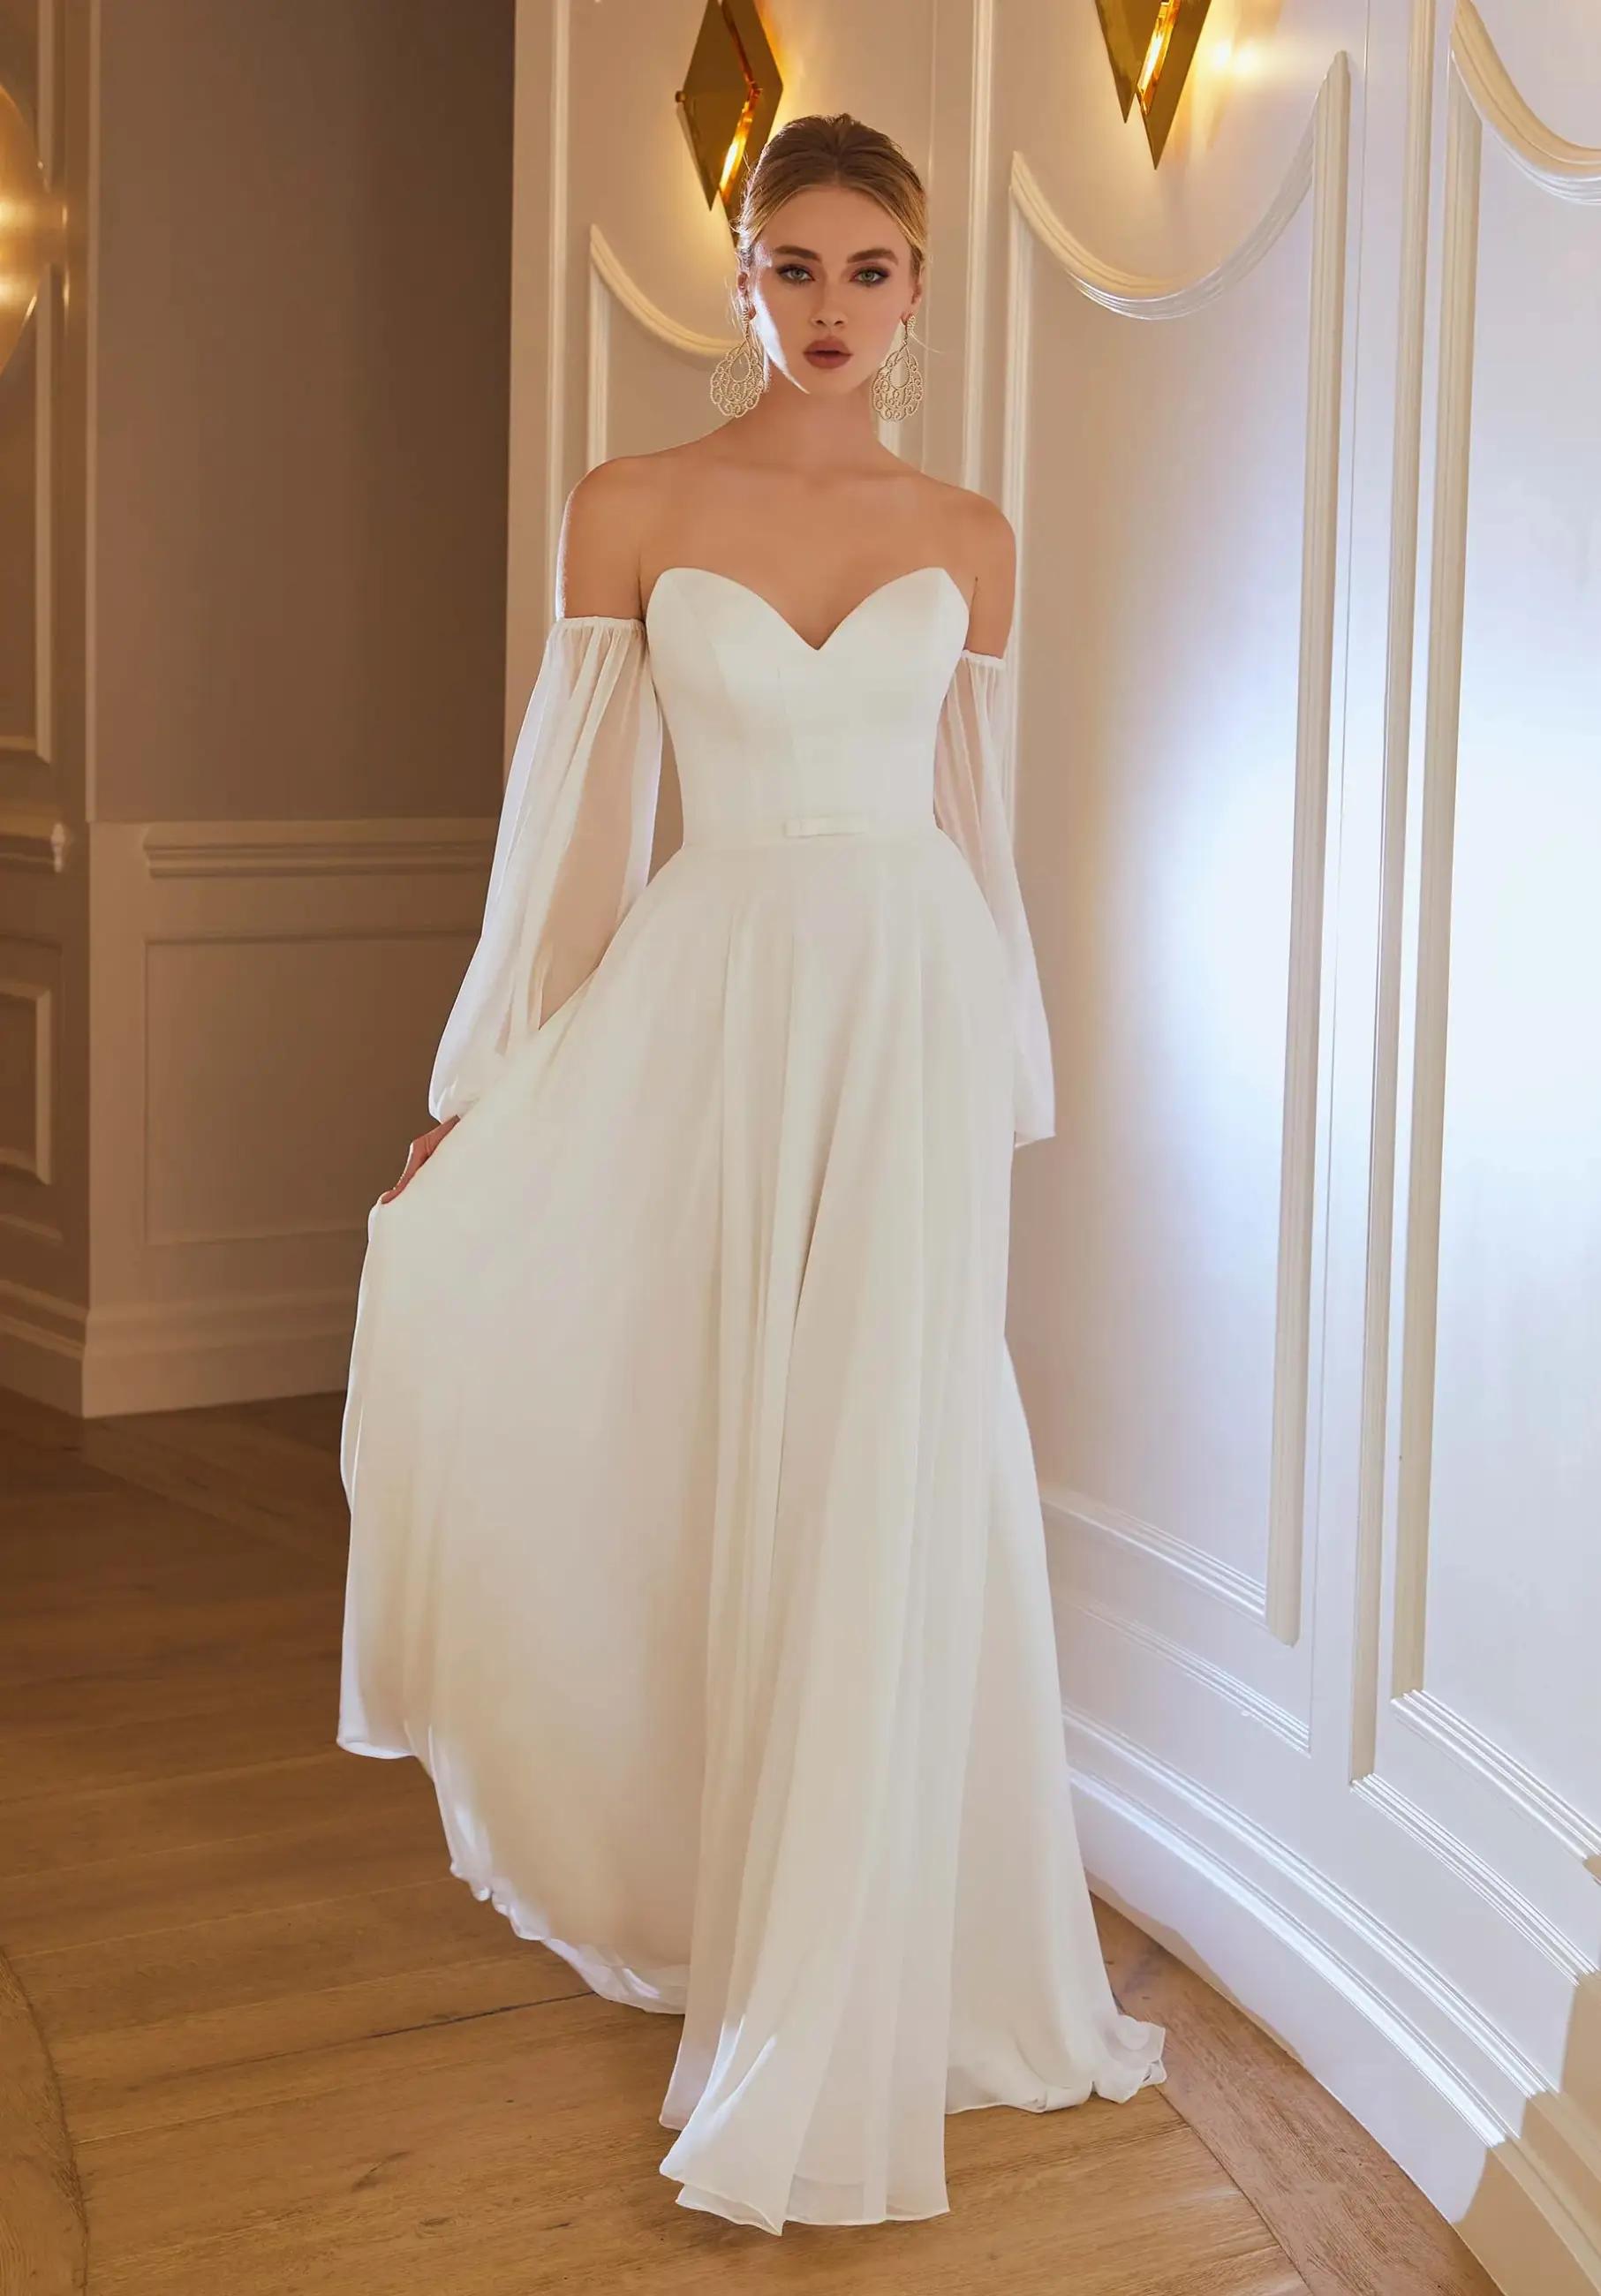 Behind the Seams: A Closer Look at the Wedding Dress Alteration Process Image